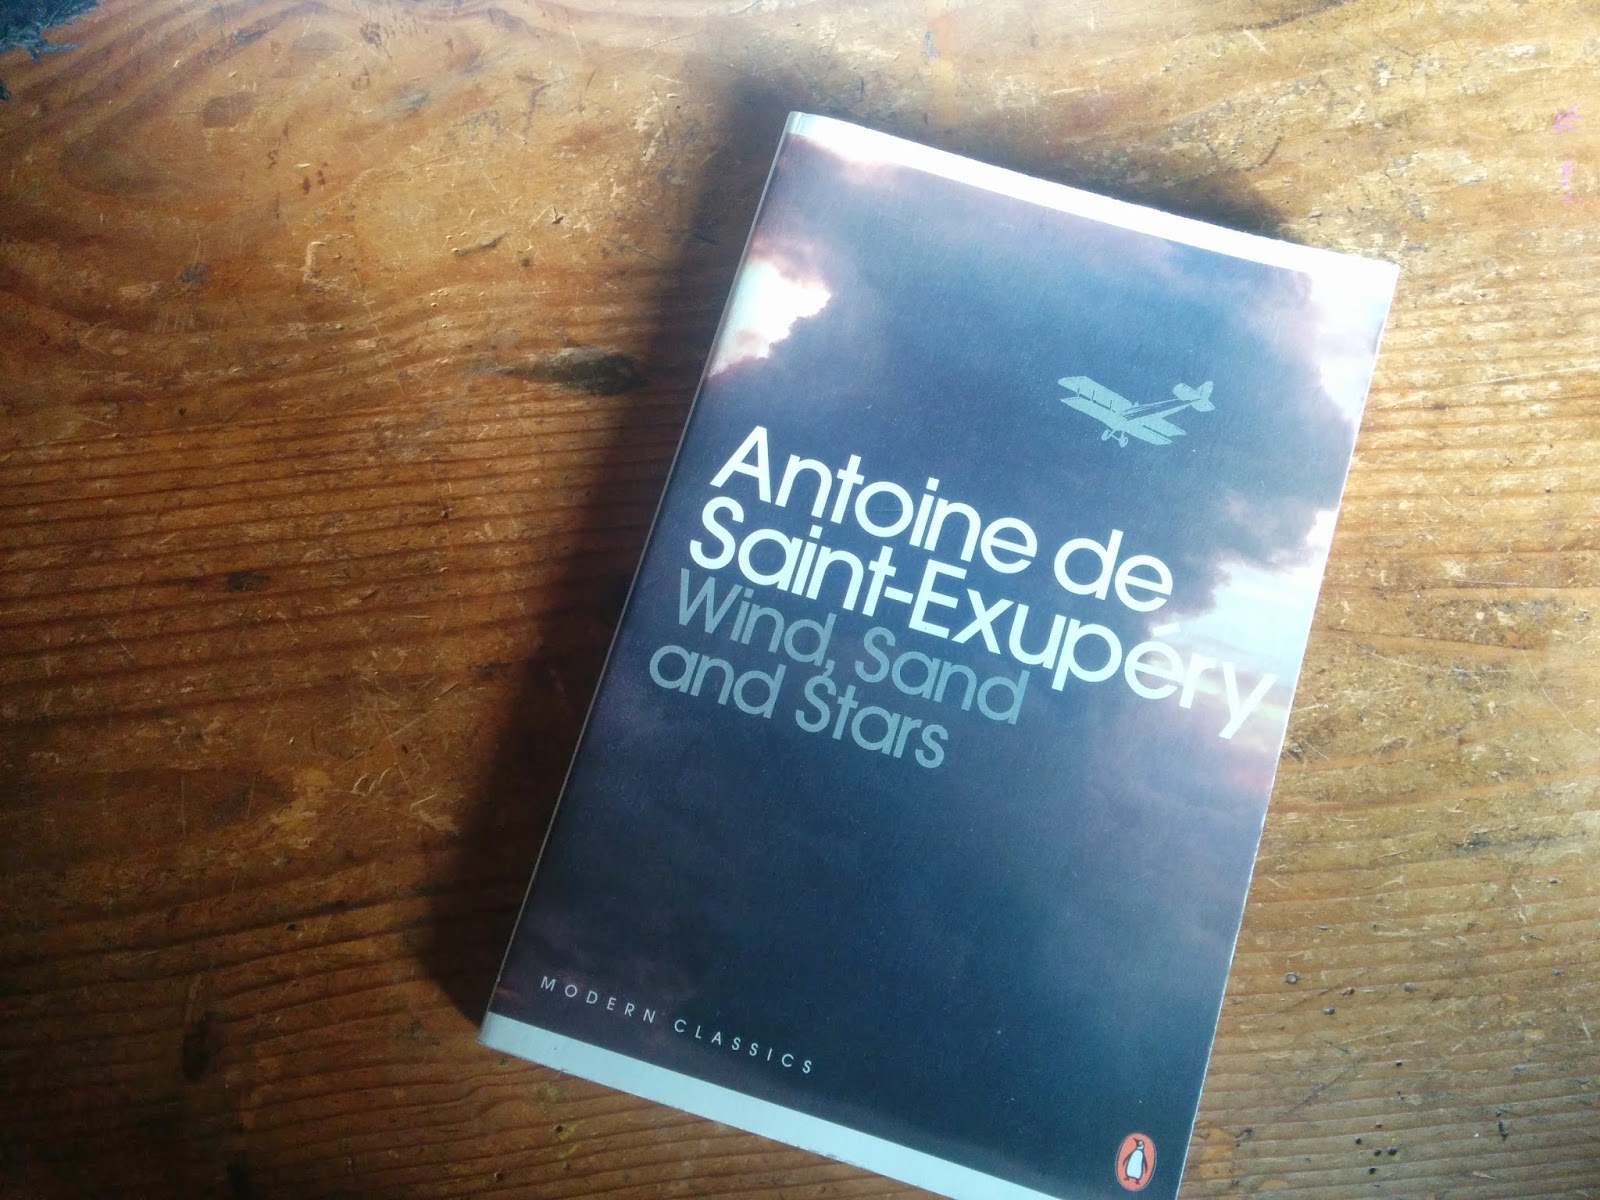 Penguin edition of Wind, Sand and Stars by Antoine de Saint-Exupéry